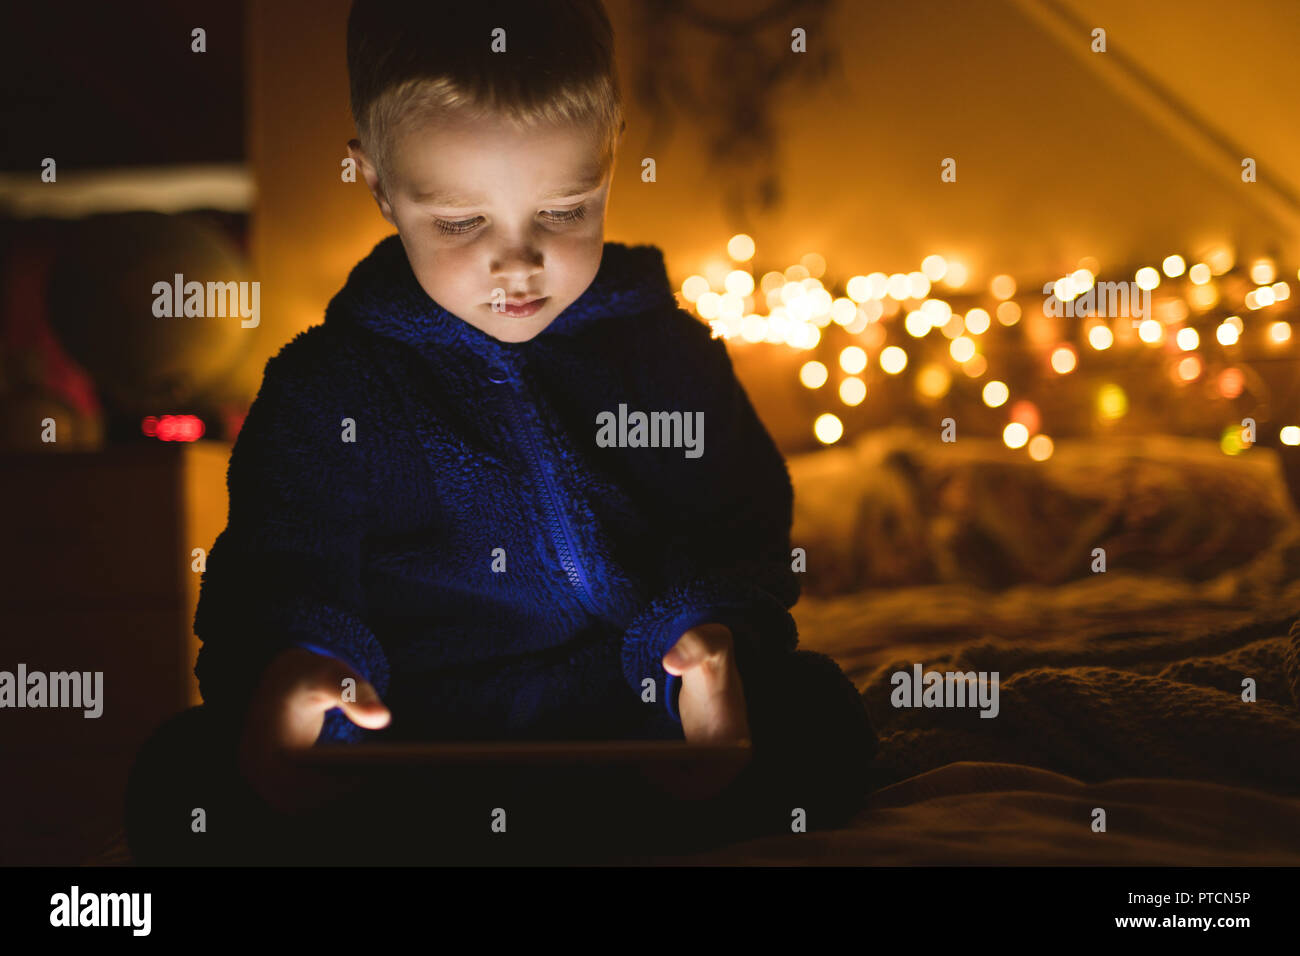 Boy in blue jacket using digital tablet against Christmas lights Stock Photo